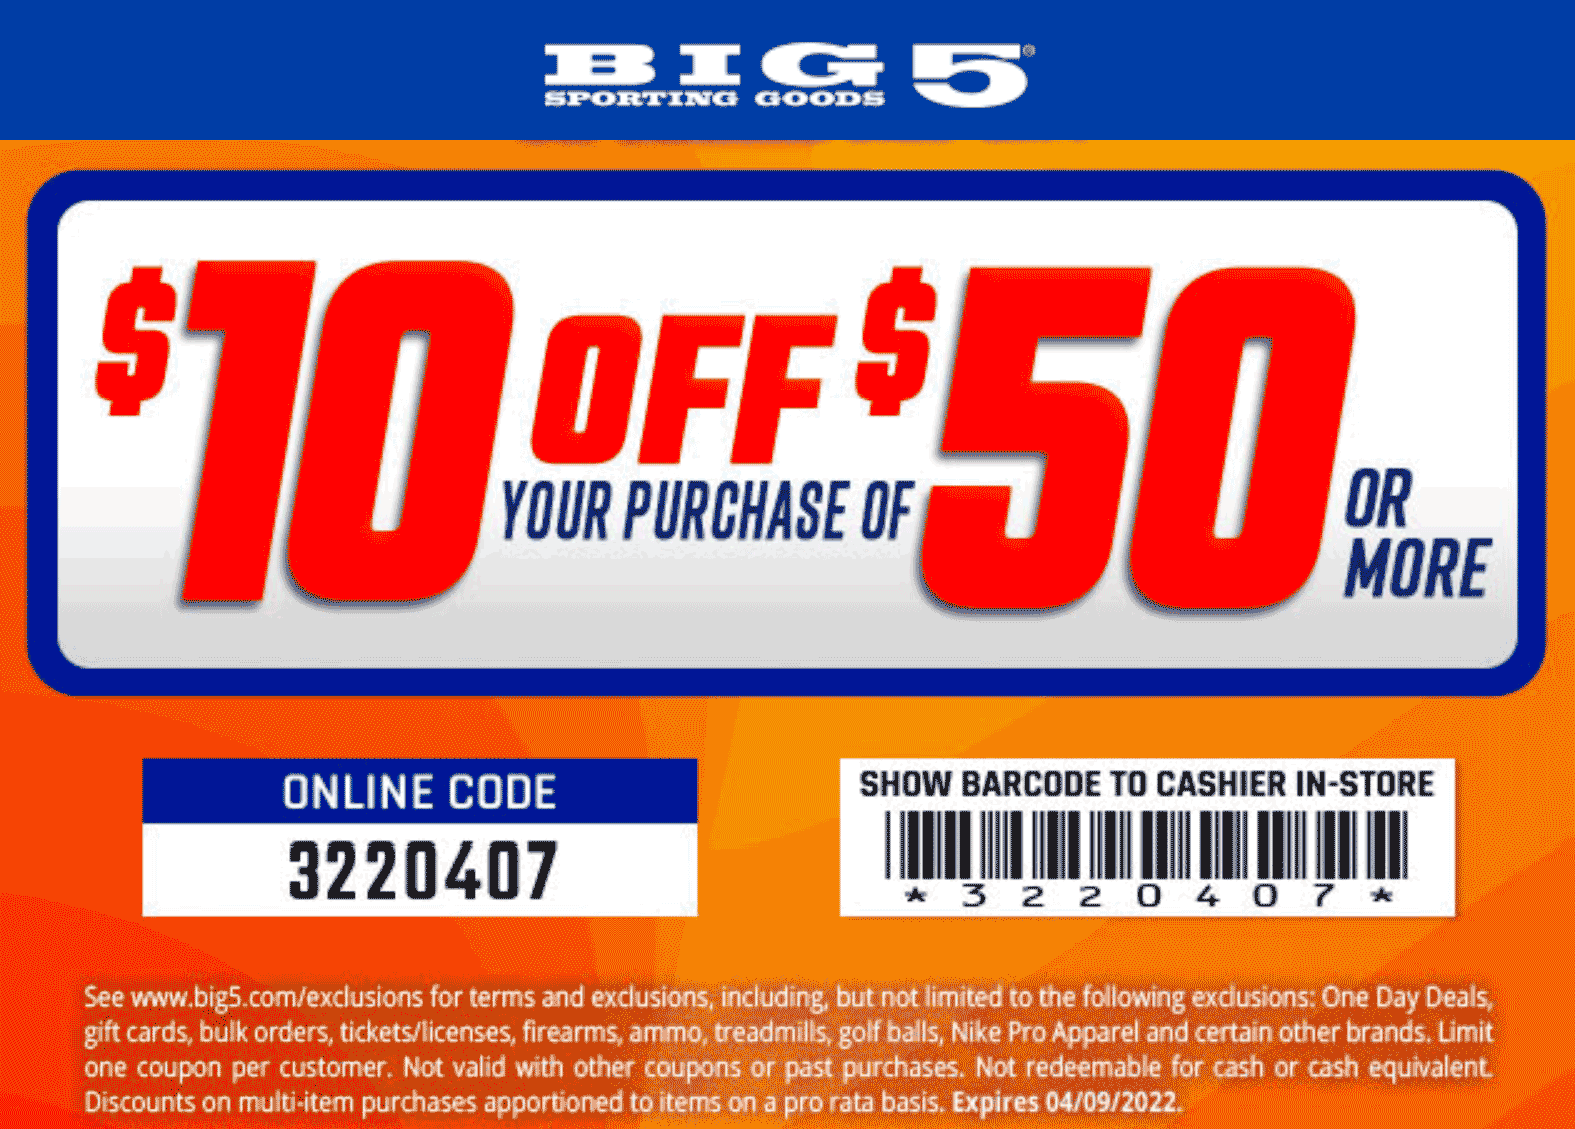 Big 5 stores Coupon  $10 off $50 at Big 5 sporting goods, or online via promo code 3220407 #big5 